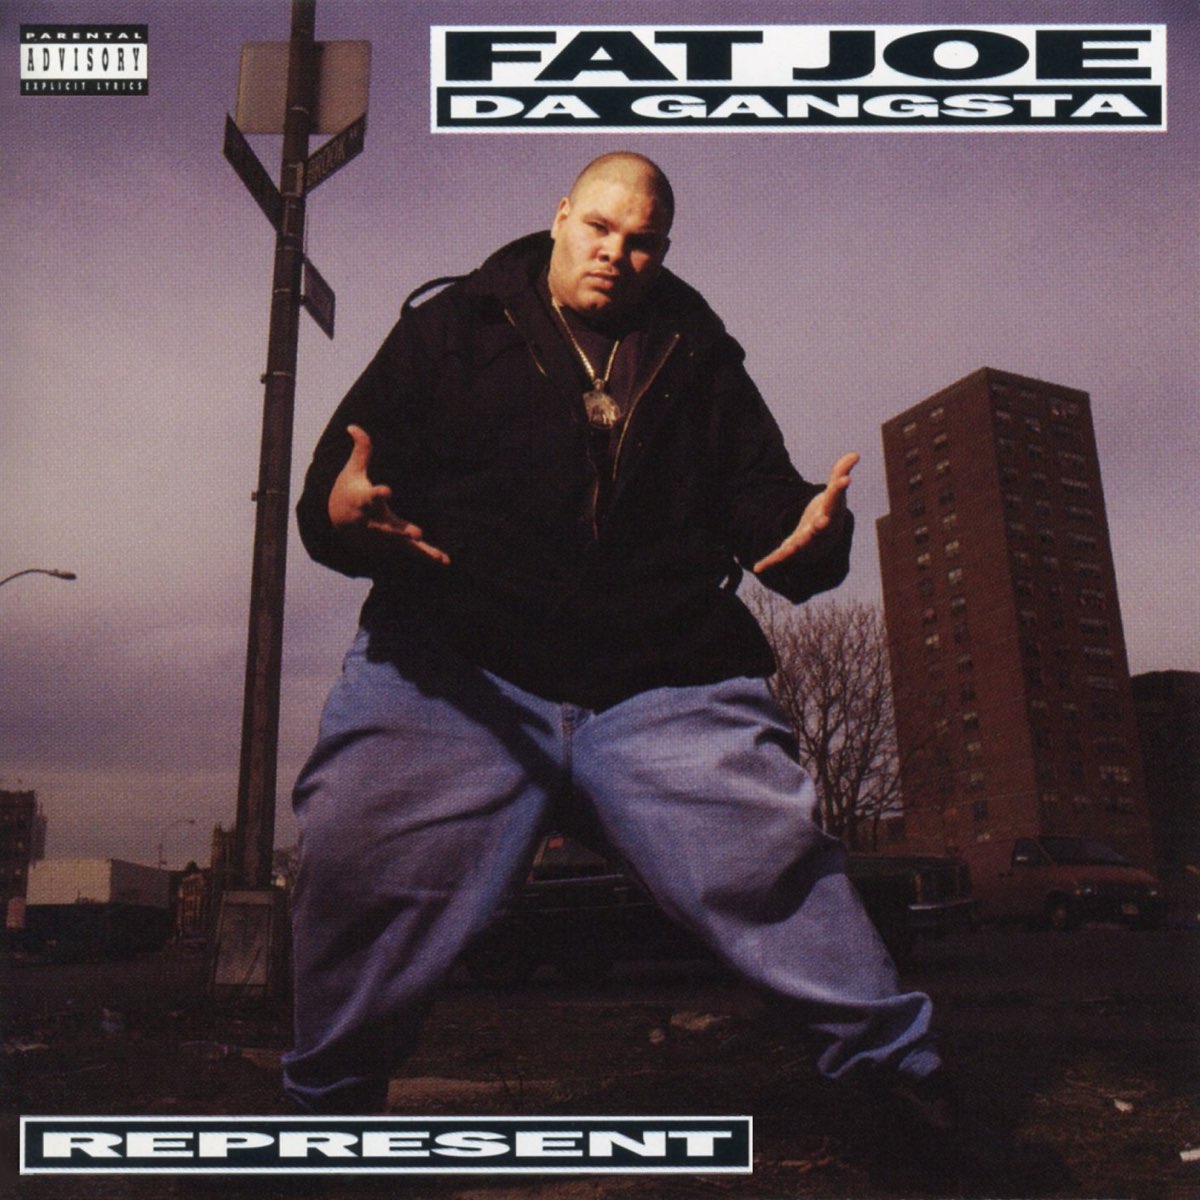 Represent - Album by Fat Joe - Apple Music